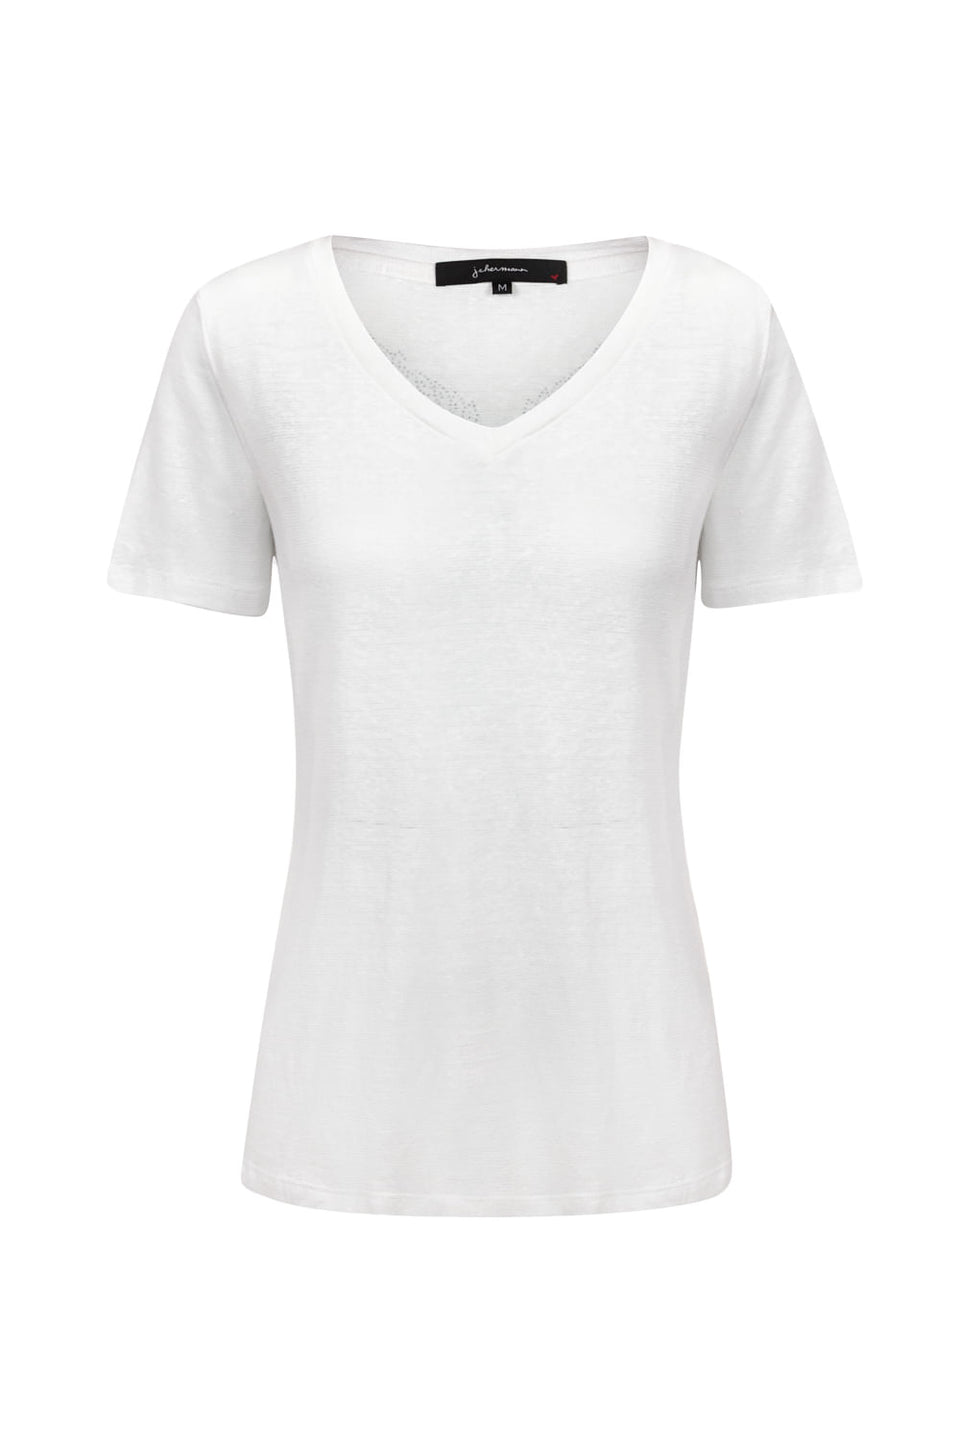 Camiseta Asa Branco